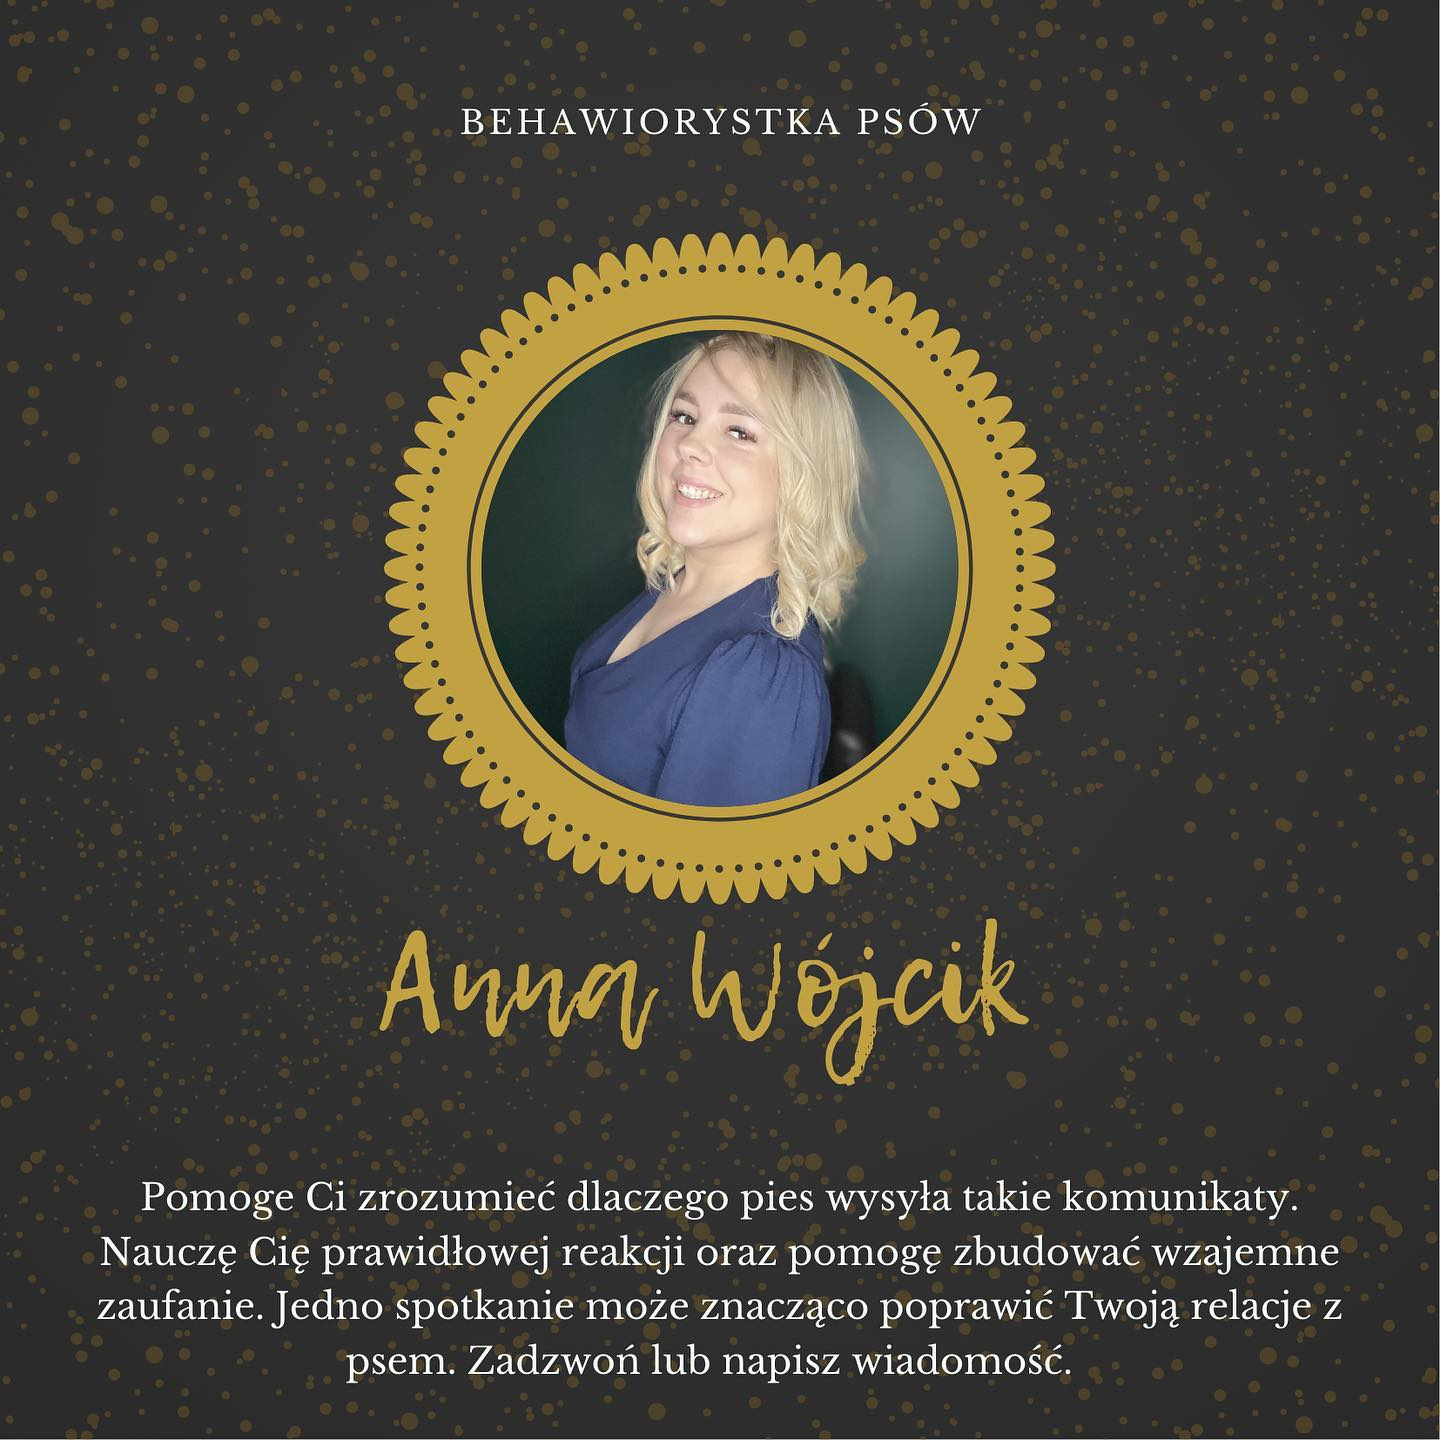 Anna Wójcik - zoopsycholog i behawiorysta